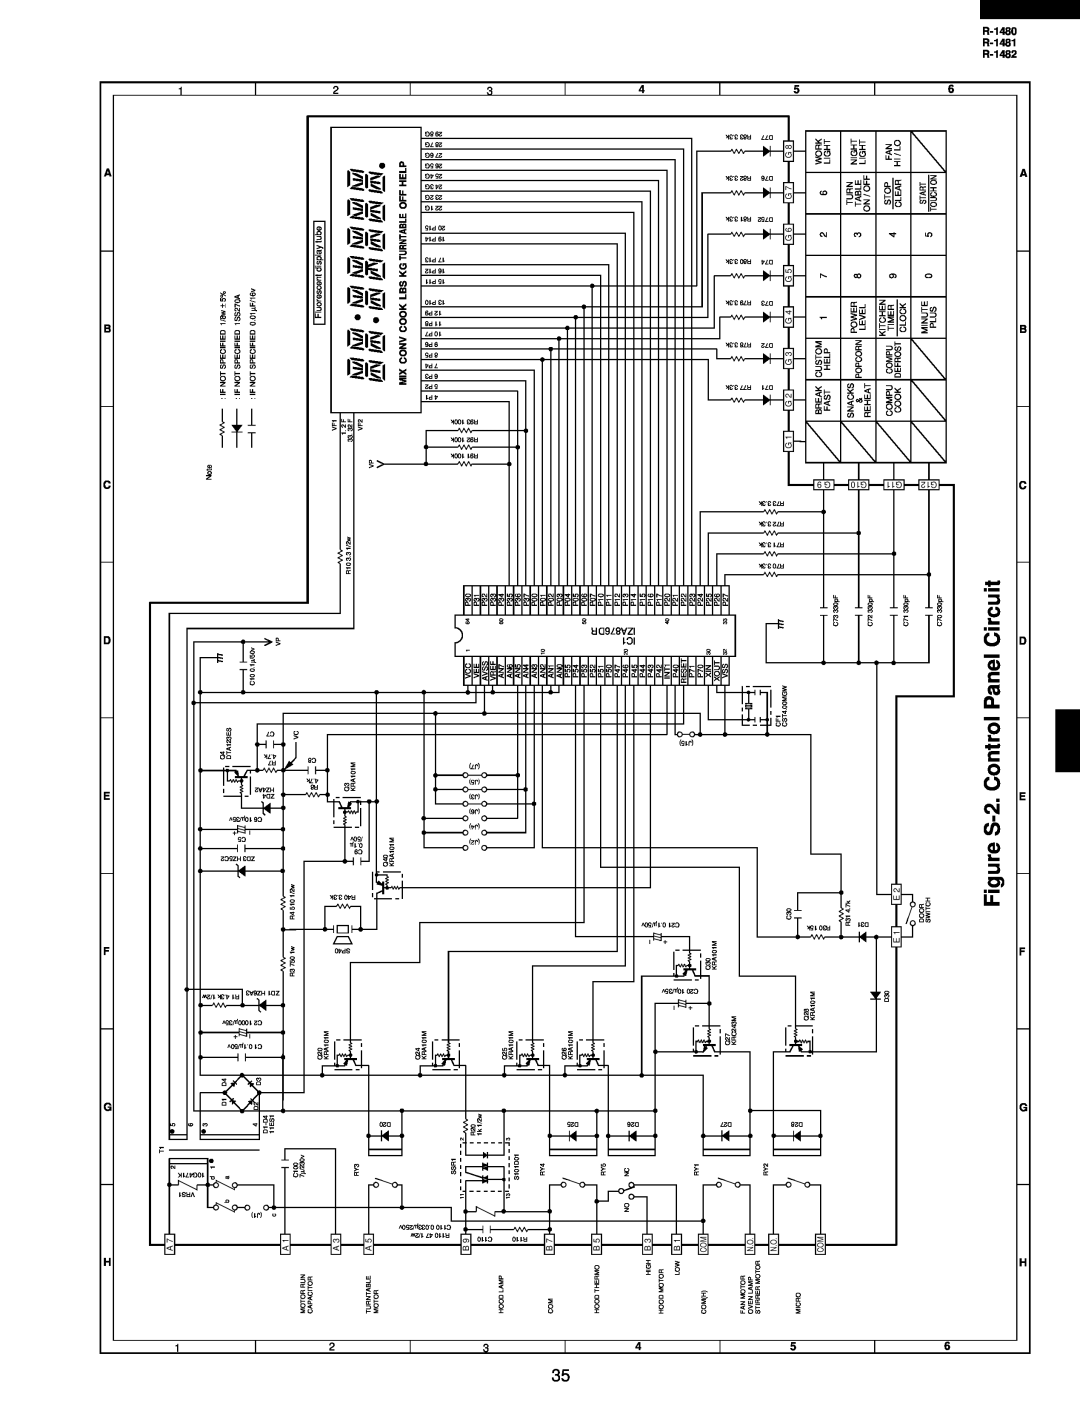 Sharp R-1482 service manual Circuit, R-1480, R-1481 